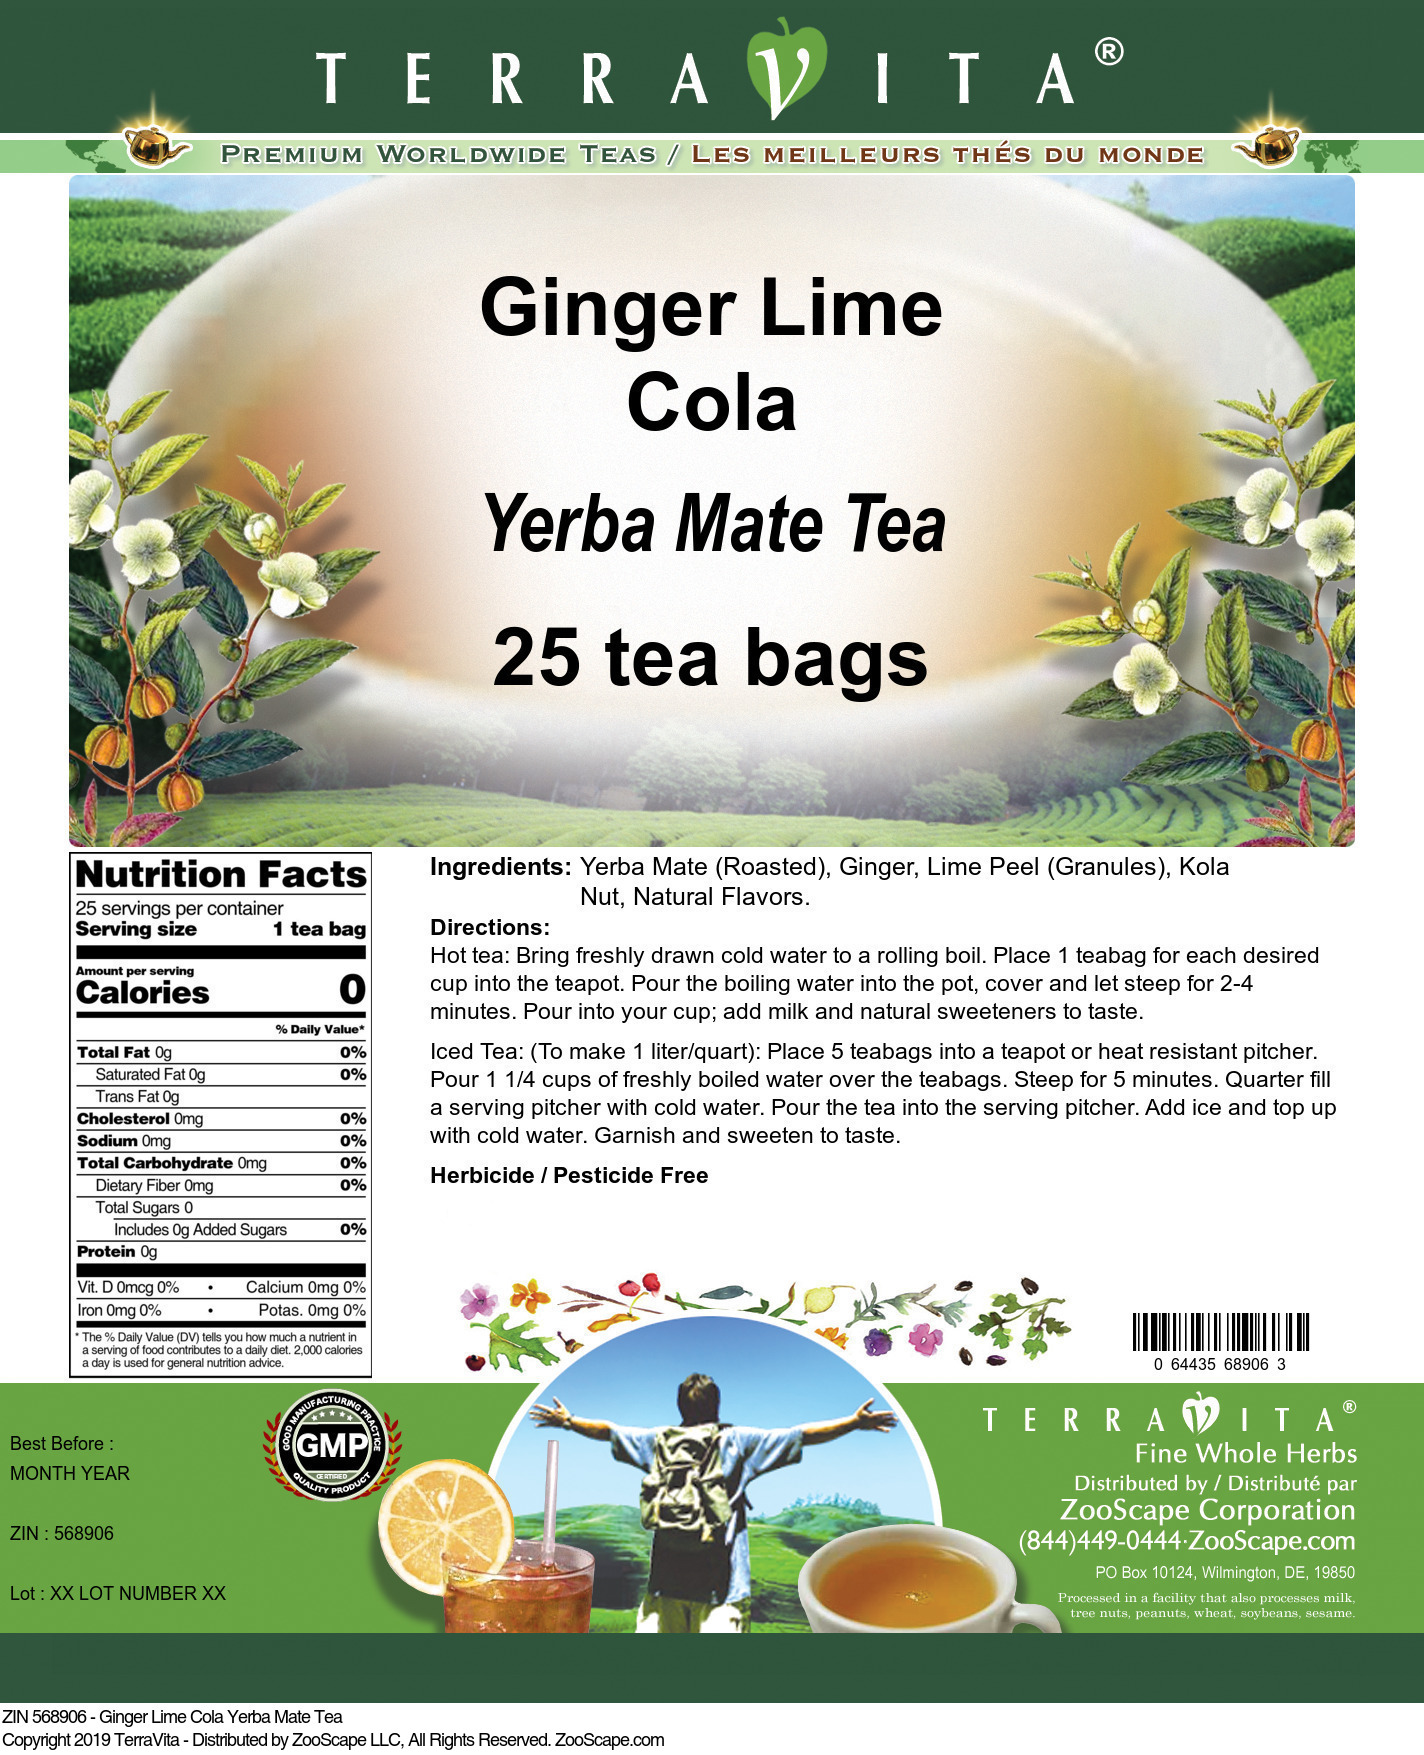 Ginger Lime Cola Yerba Mate Tea - Label